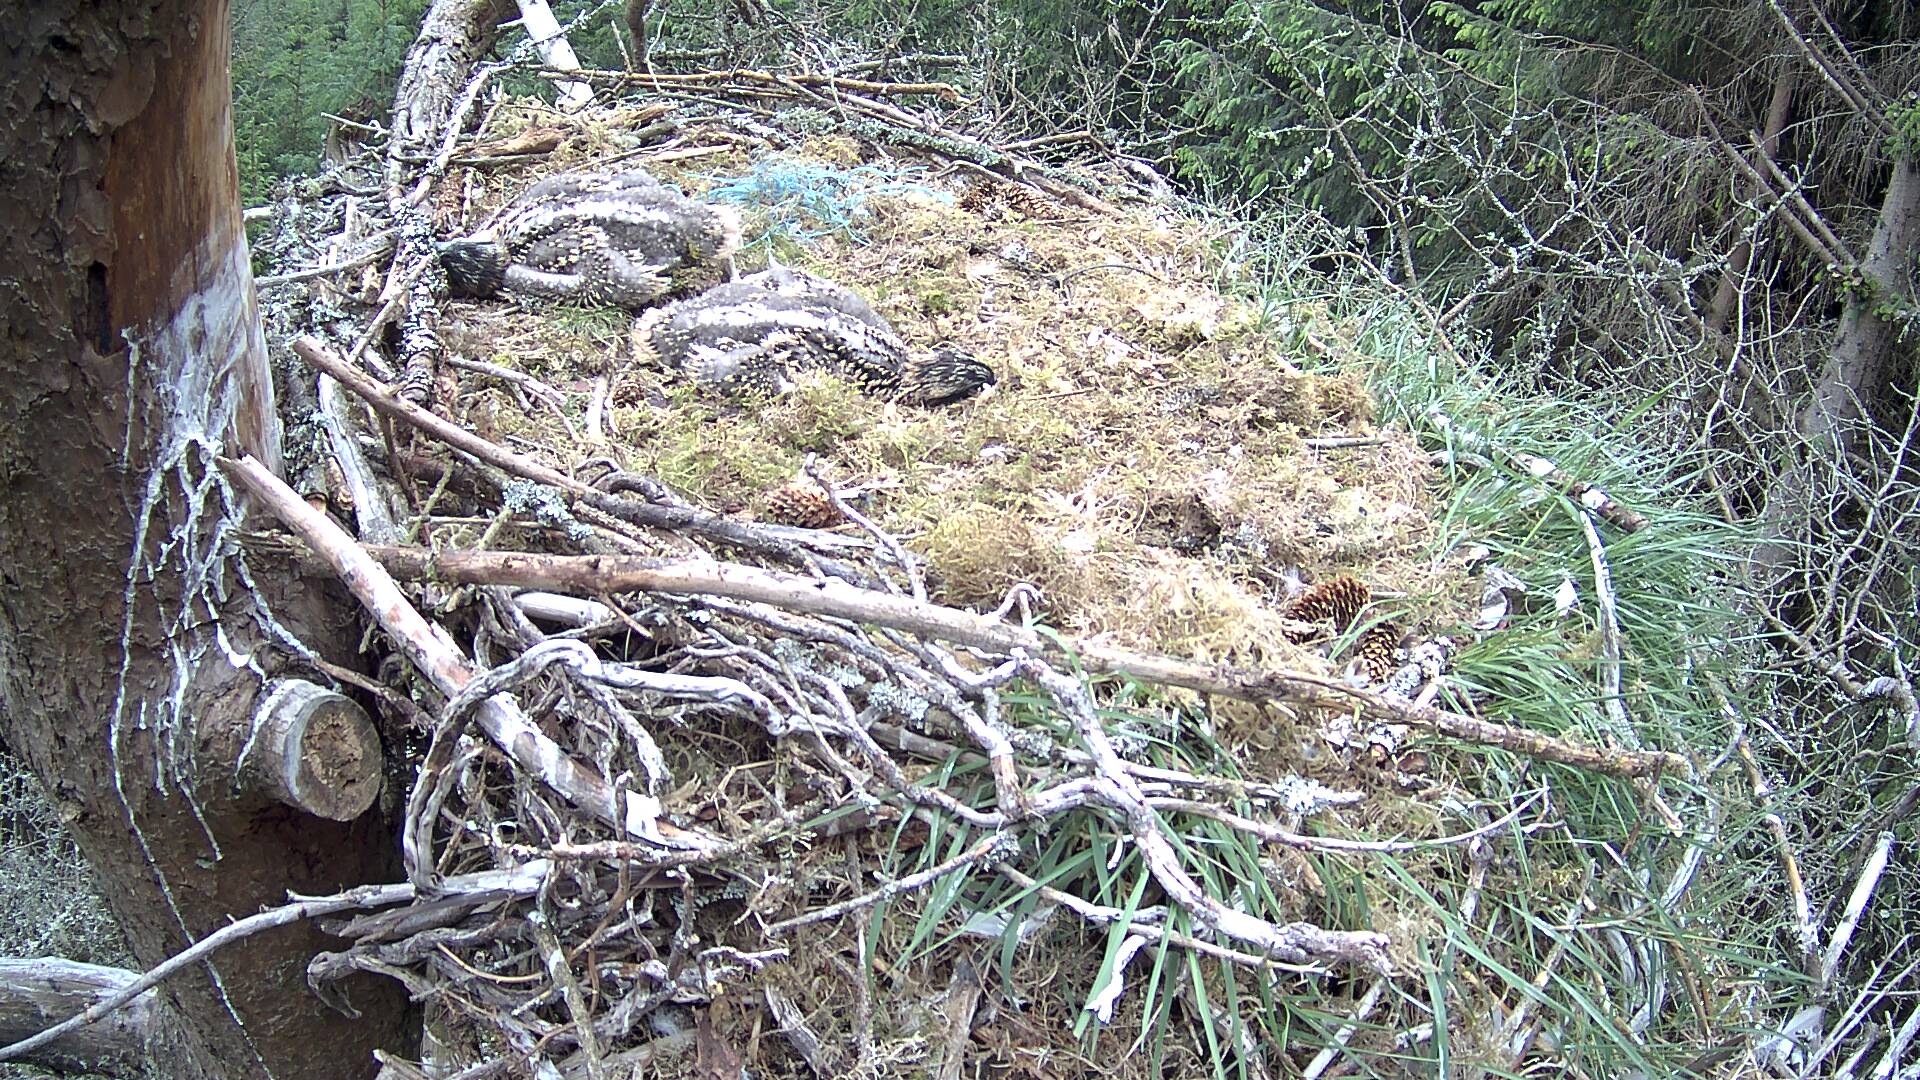 Ospreys in nest